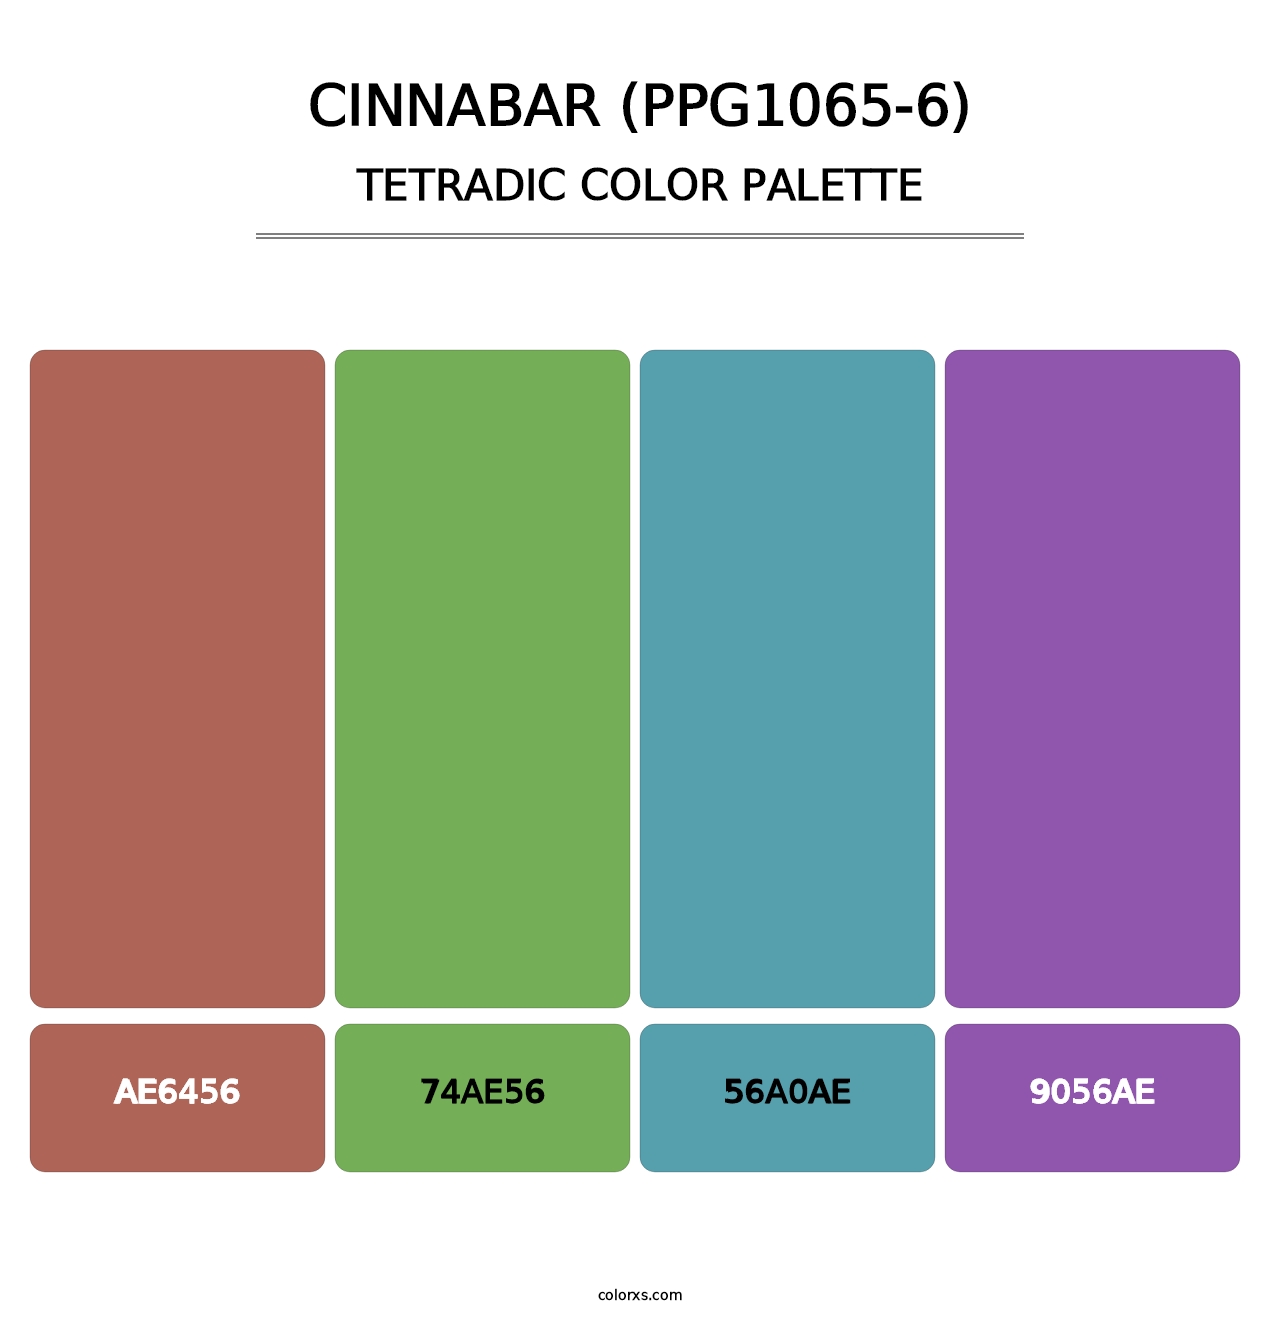 Cinnabar (PPG1065-6) - Tetradic Color Palette